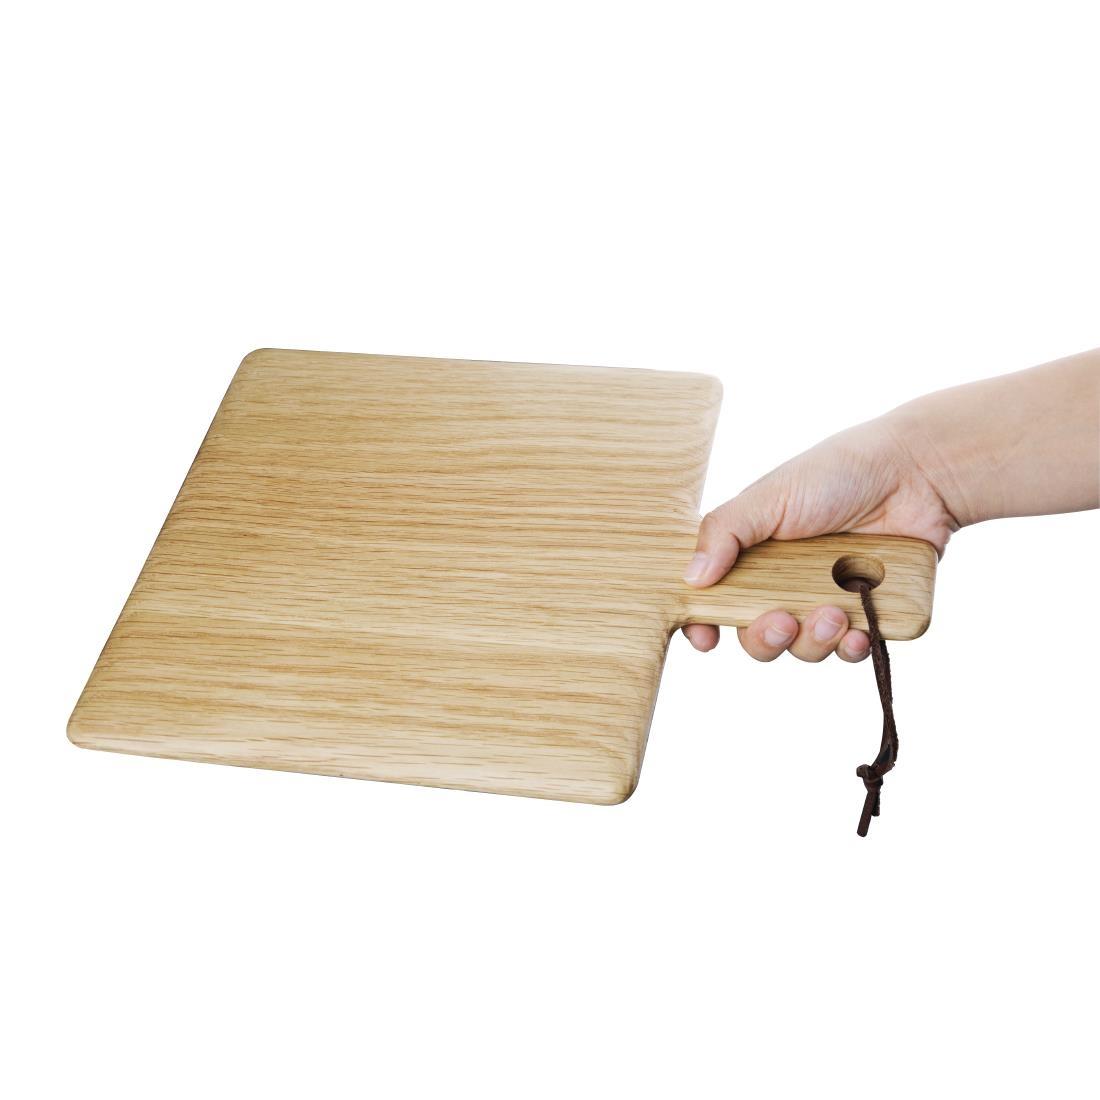 Olympia Oak Wood Handled Wooden Board Small 230mm - GM260  - 3